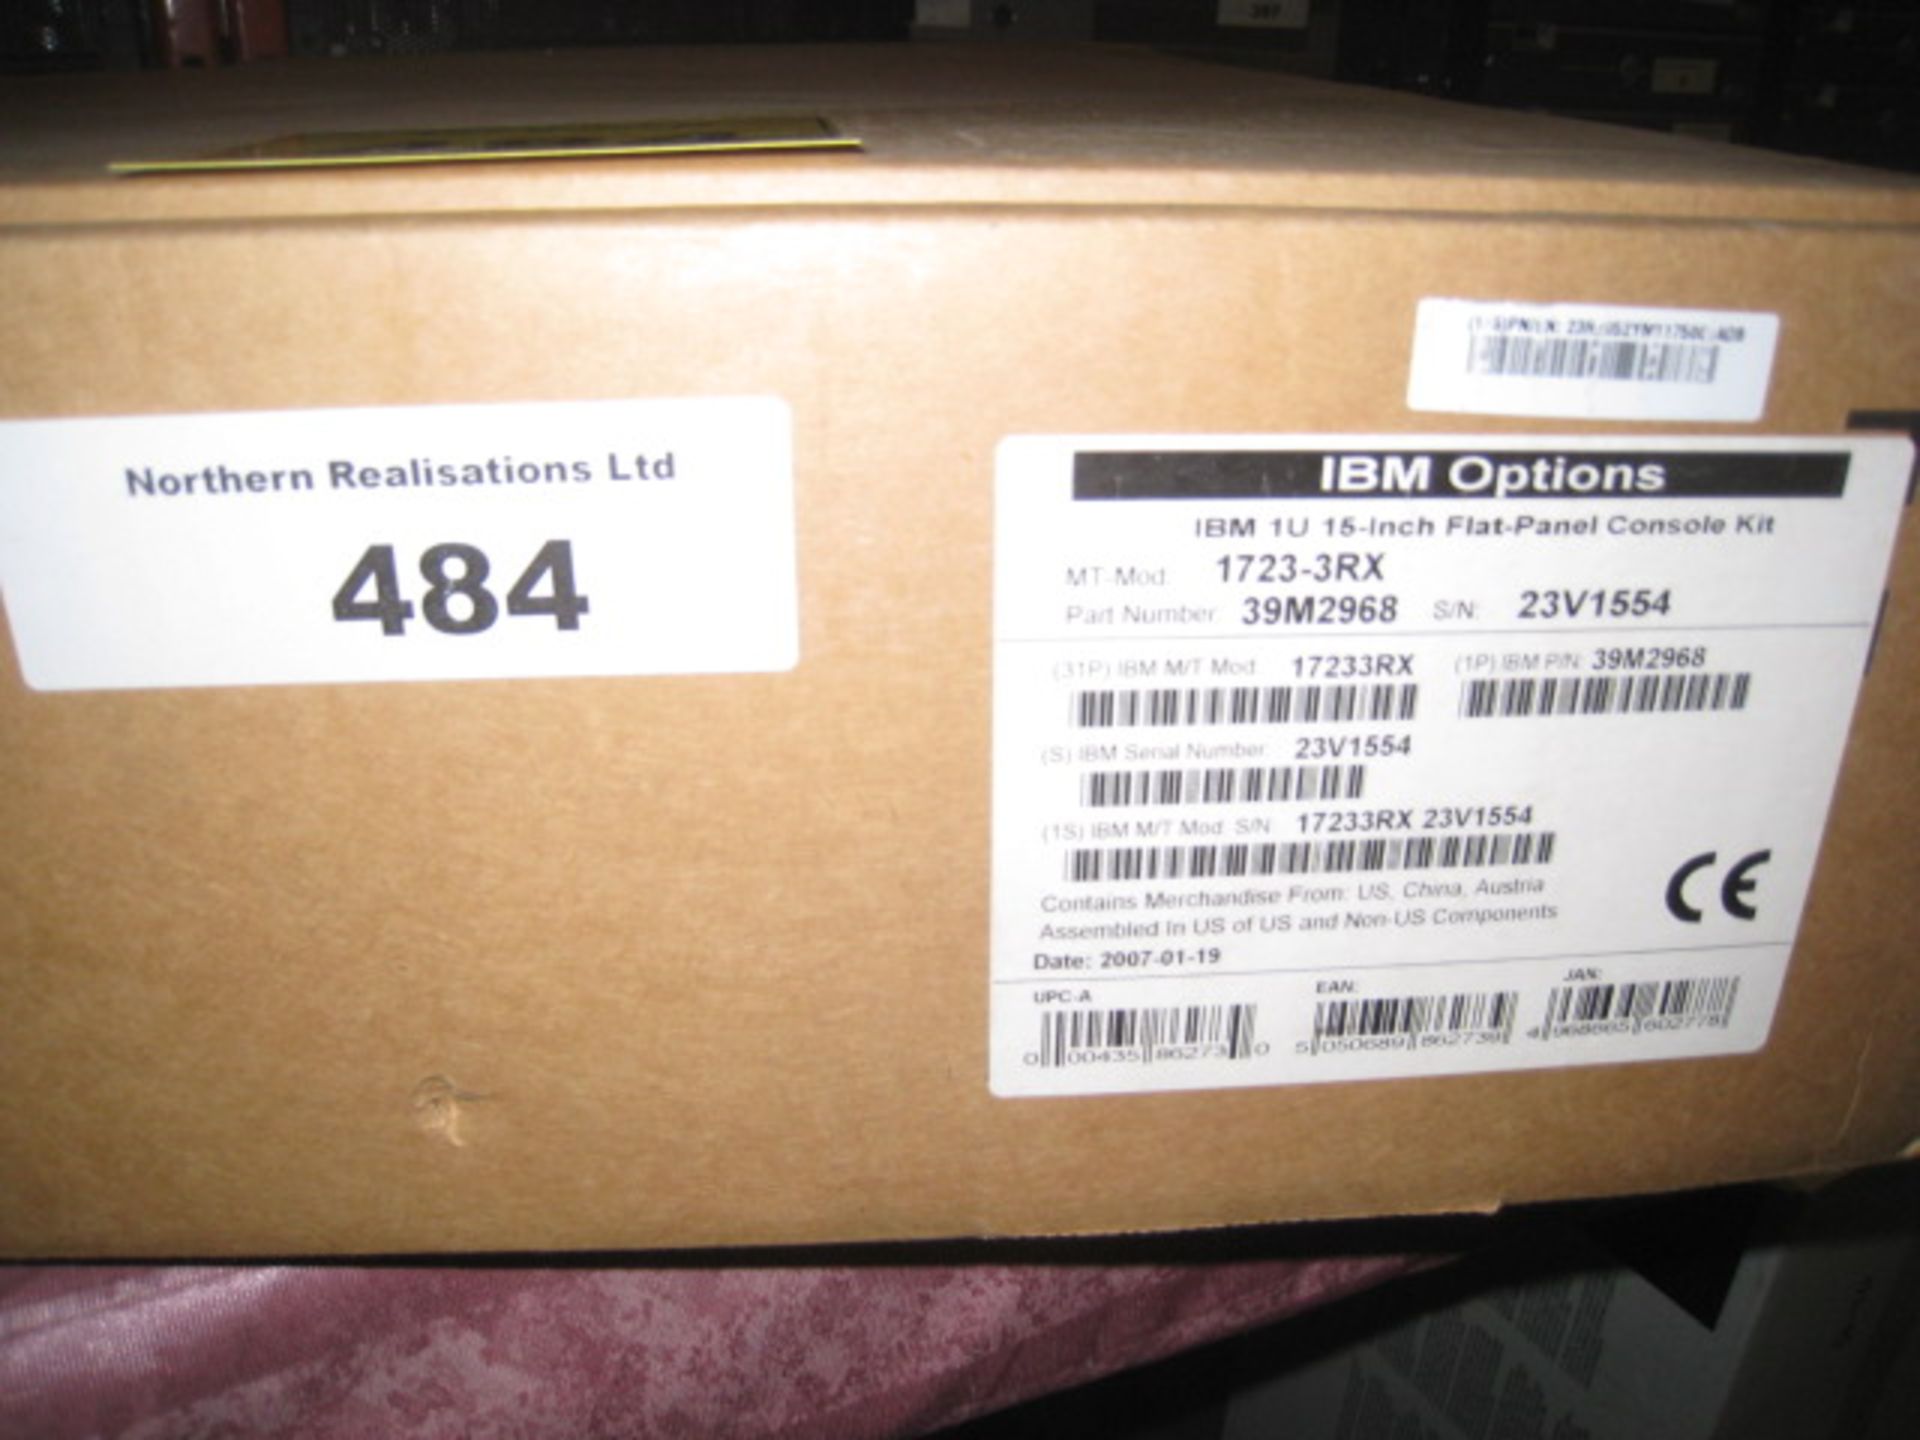 IBM 1U 15" FLAT PANEL MONITOR CONSOL KIT (WITHOUT KEYBOARD) MODEL MT 17232RX. STILL  IN ORIGINAL - Image 2 of 2